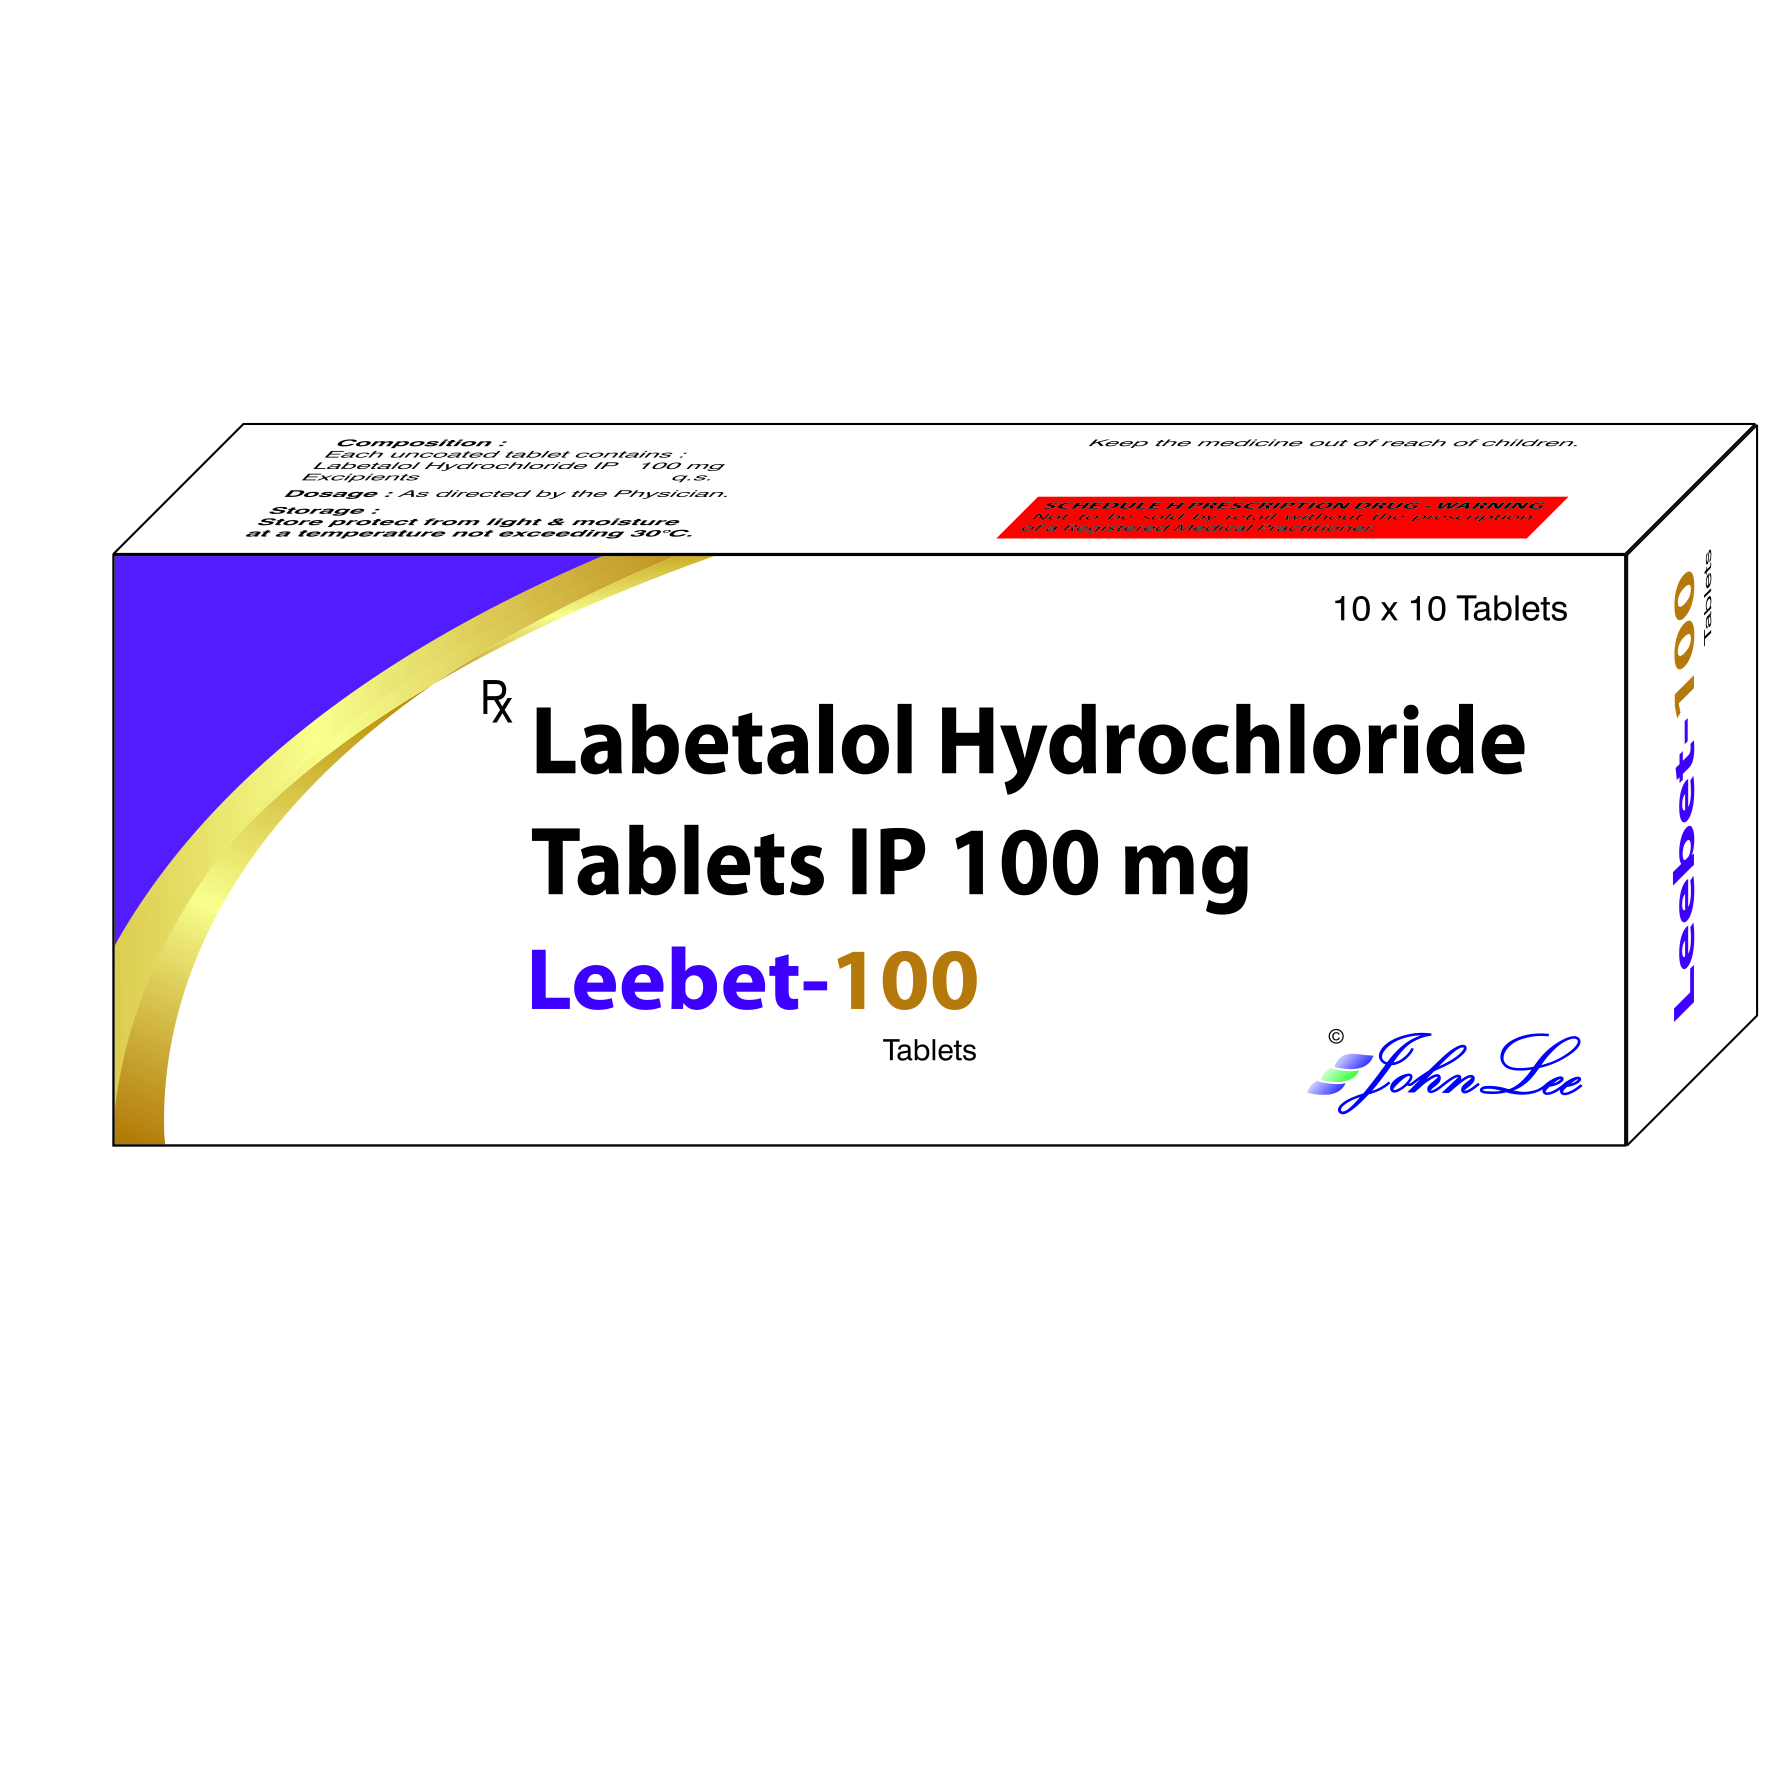 Leebet-100 – Johnlee Pharmaceuticals Pvt. Ltd.